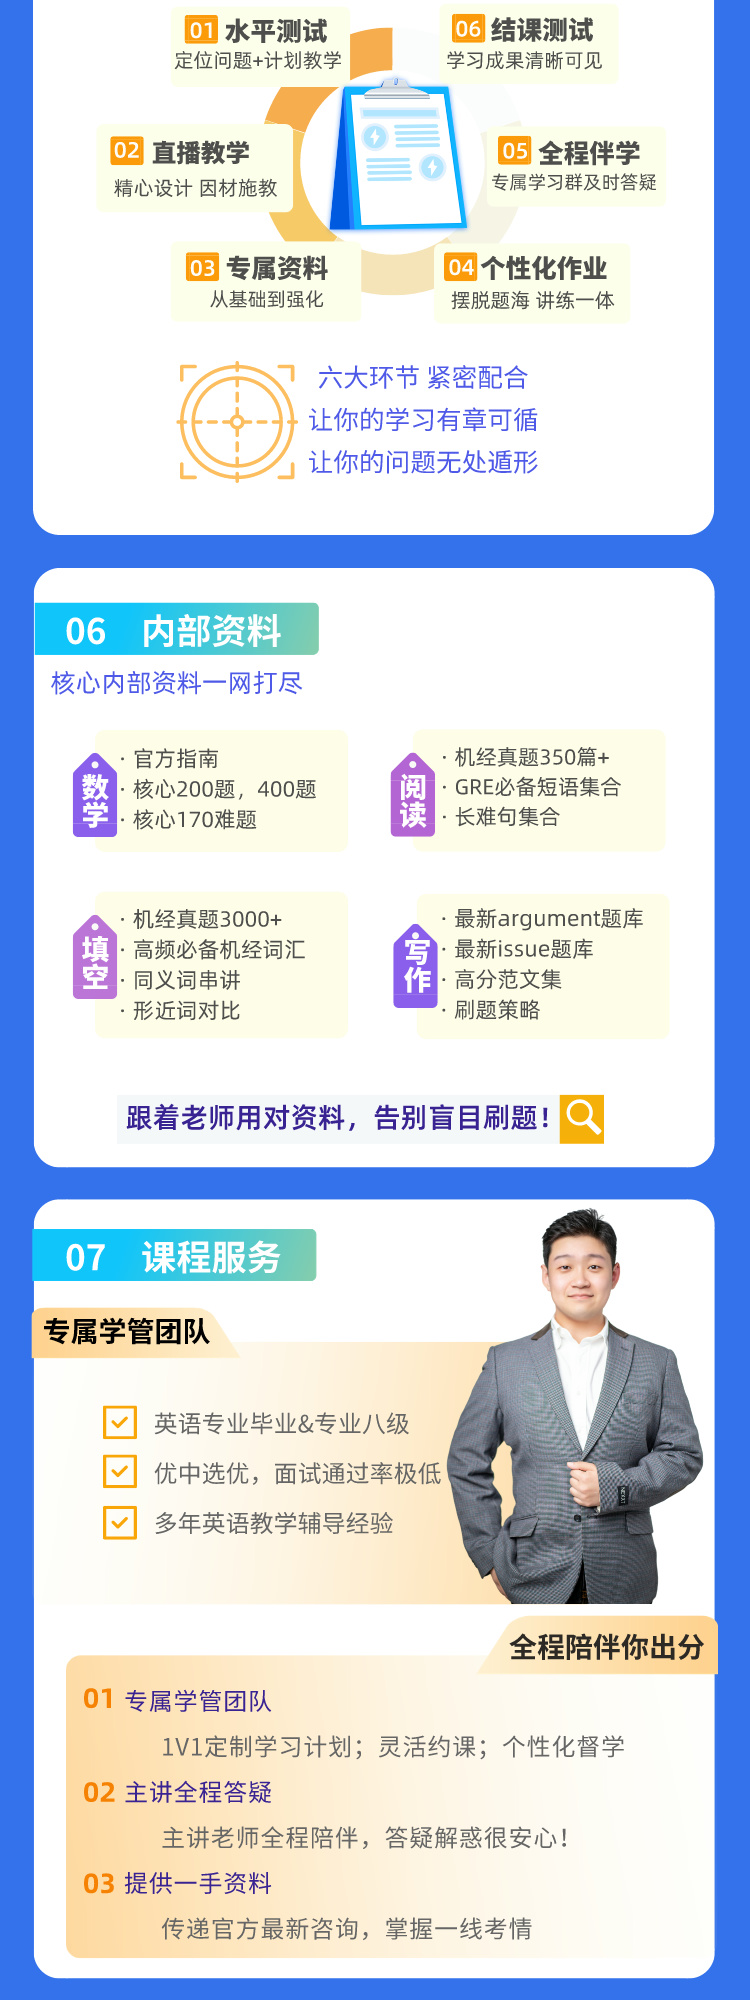 https://simg01.gaodunwangxiao.com/uploadfiles/product-center/202403/19/36ac7_20240319170106.jpeg